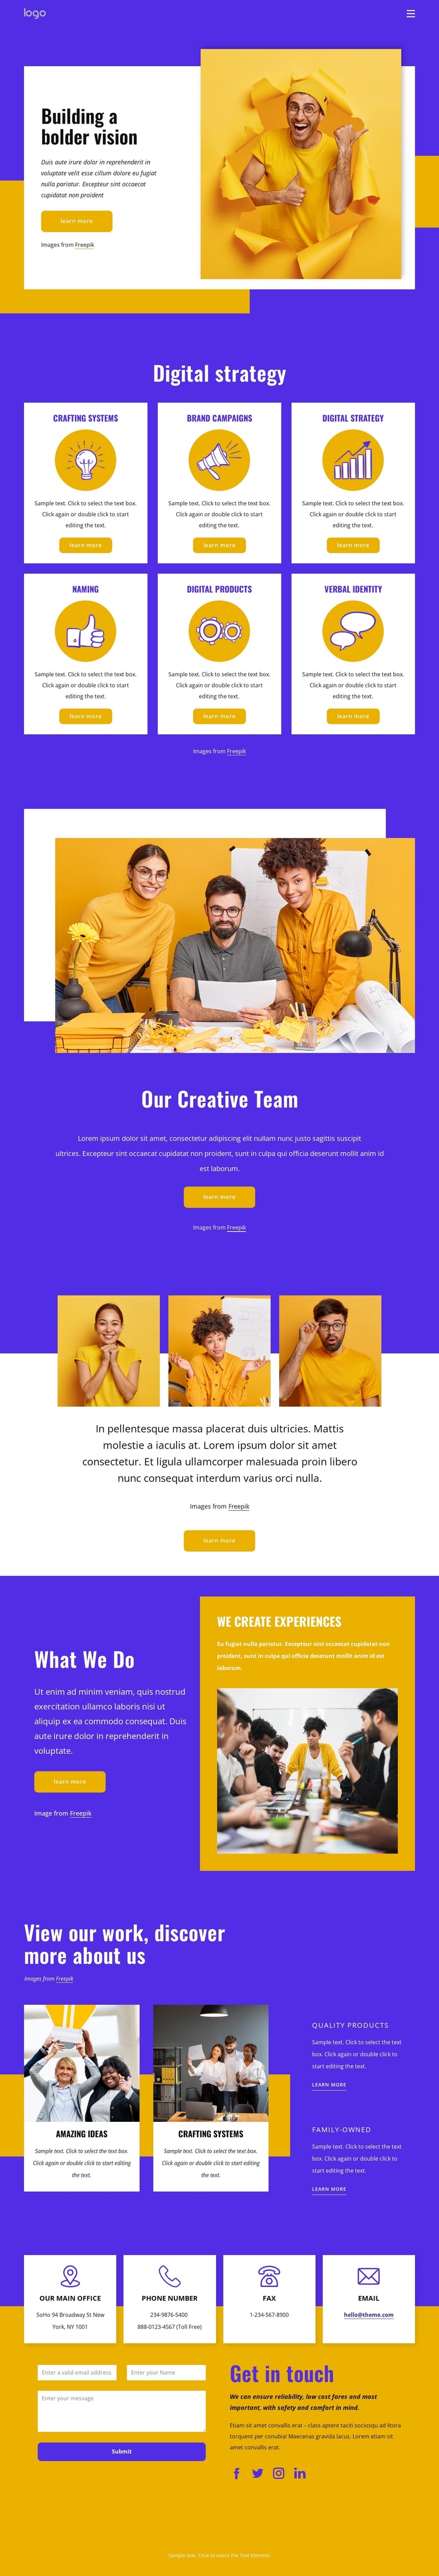 UX design and branding agency Website Builder Software